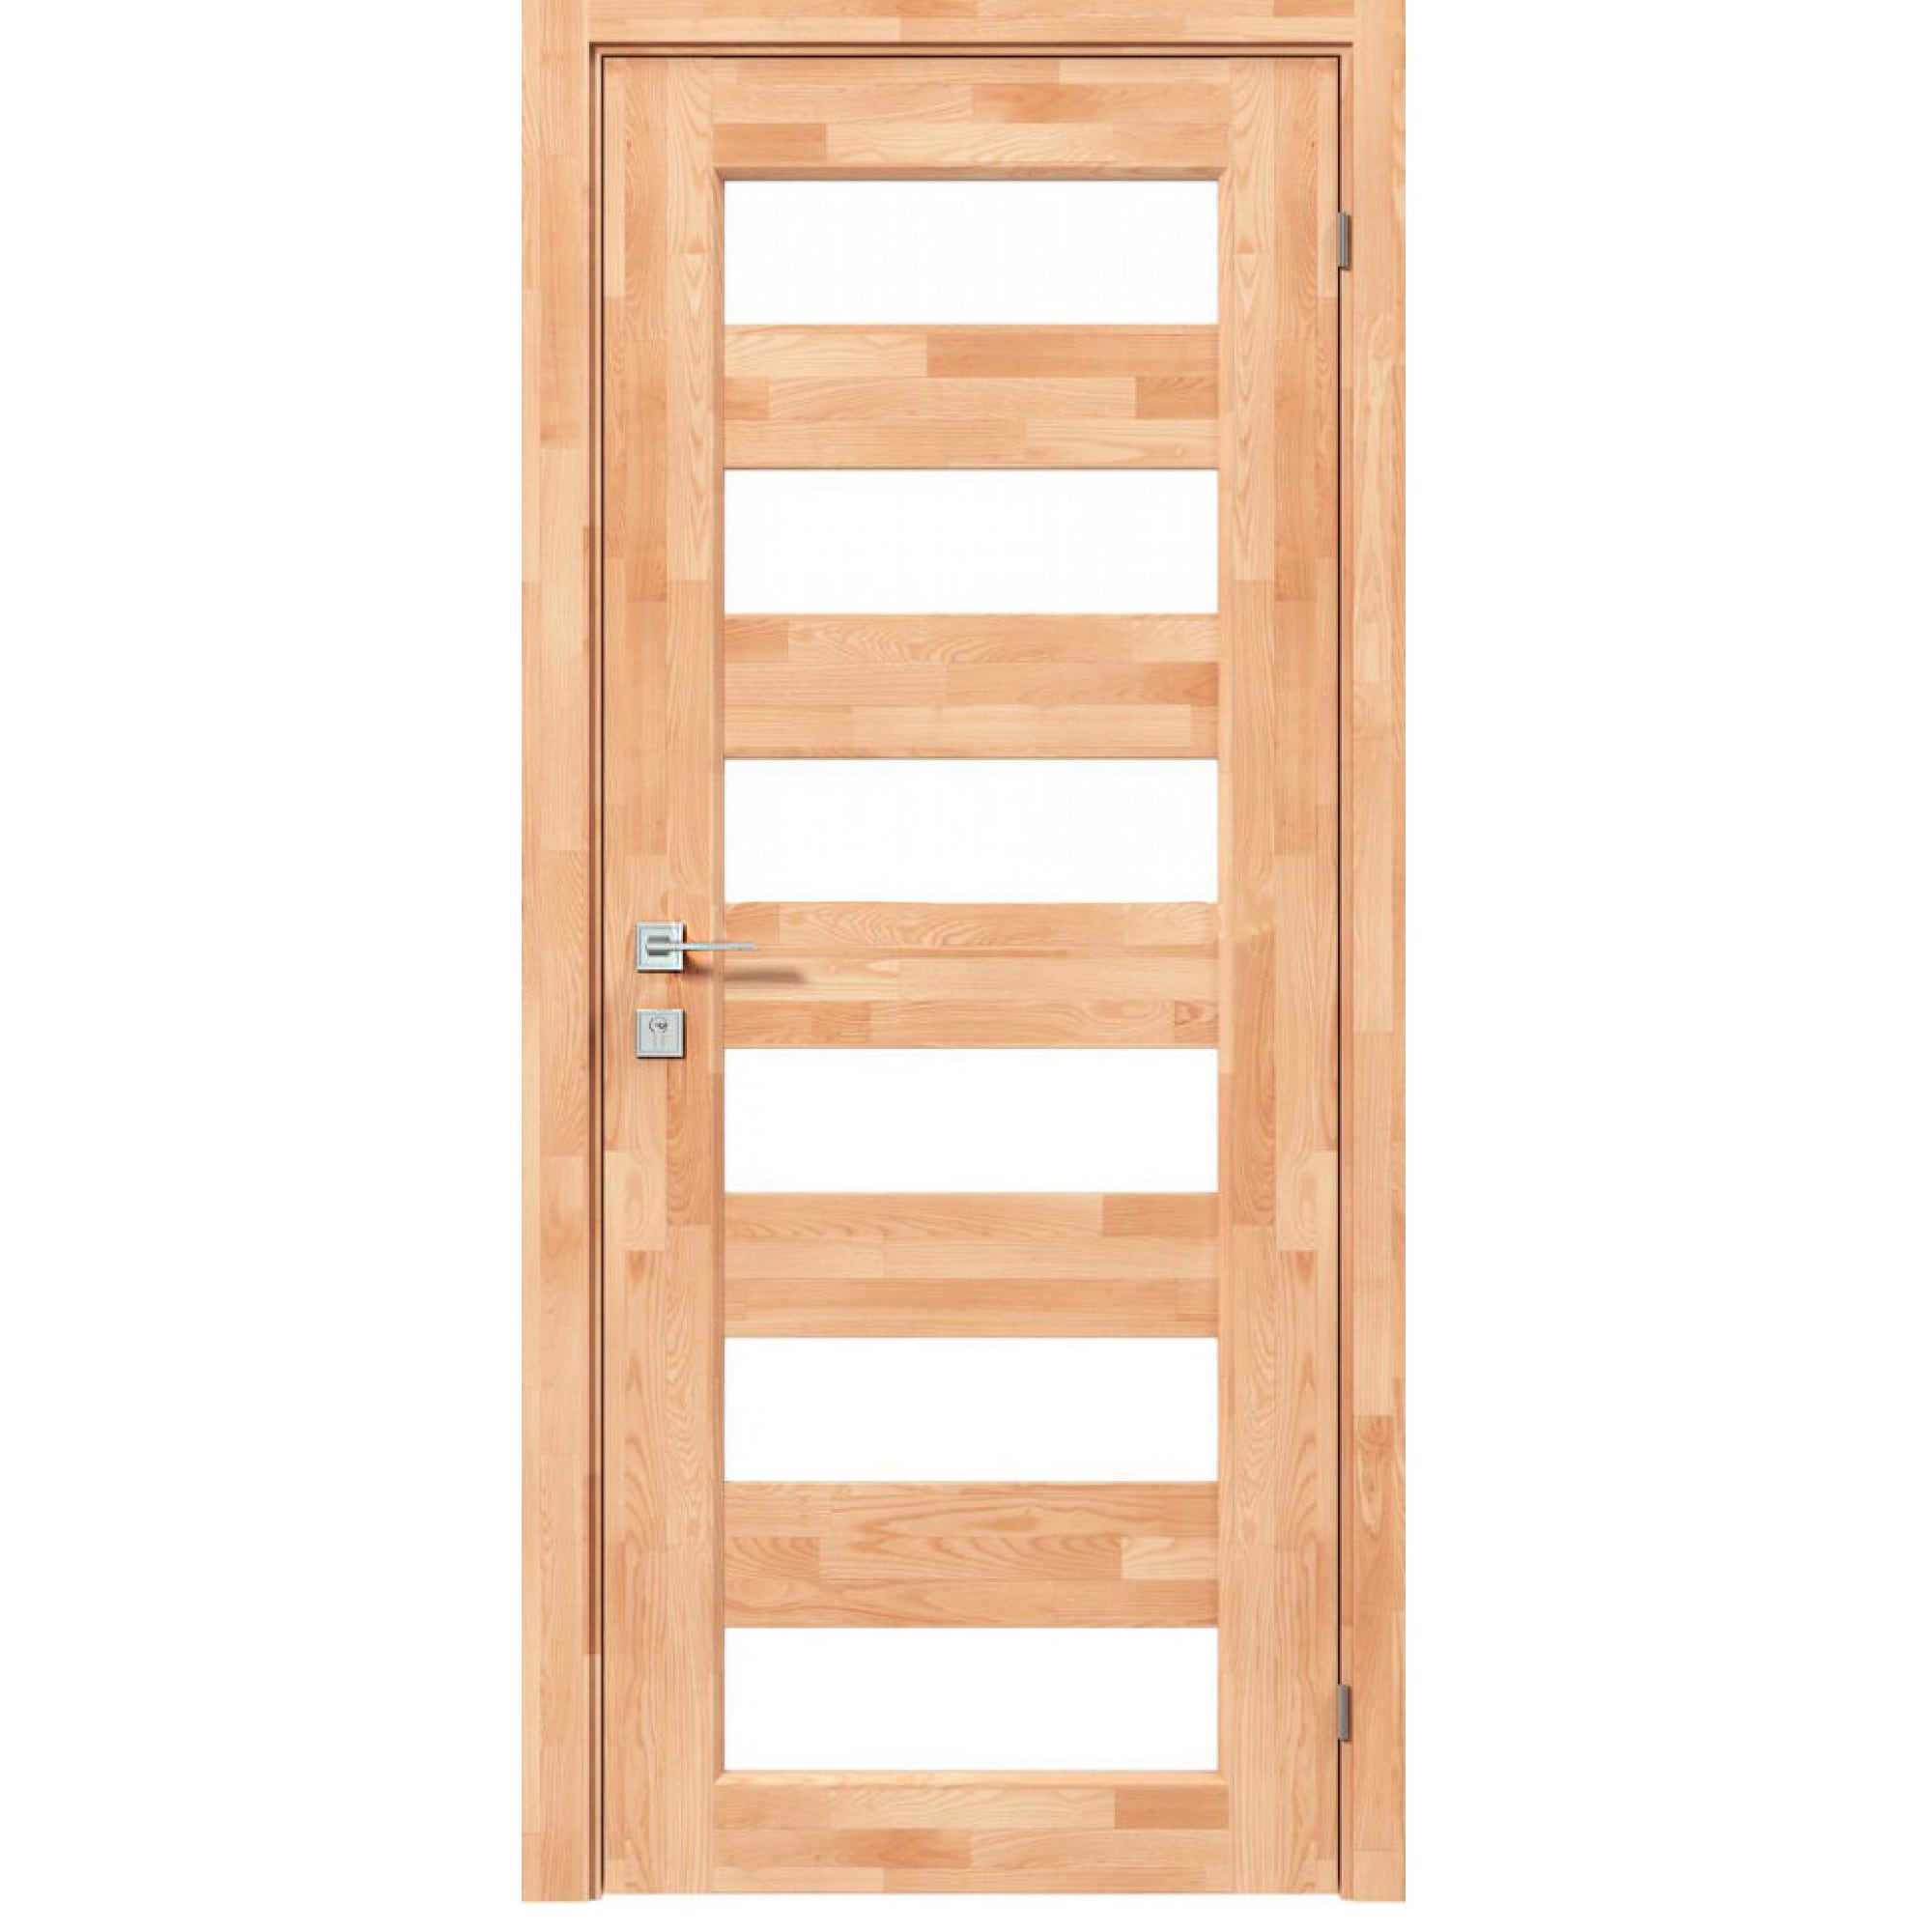 Двери из массива дерева Woodmix Master